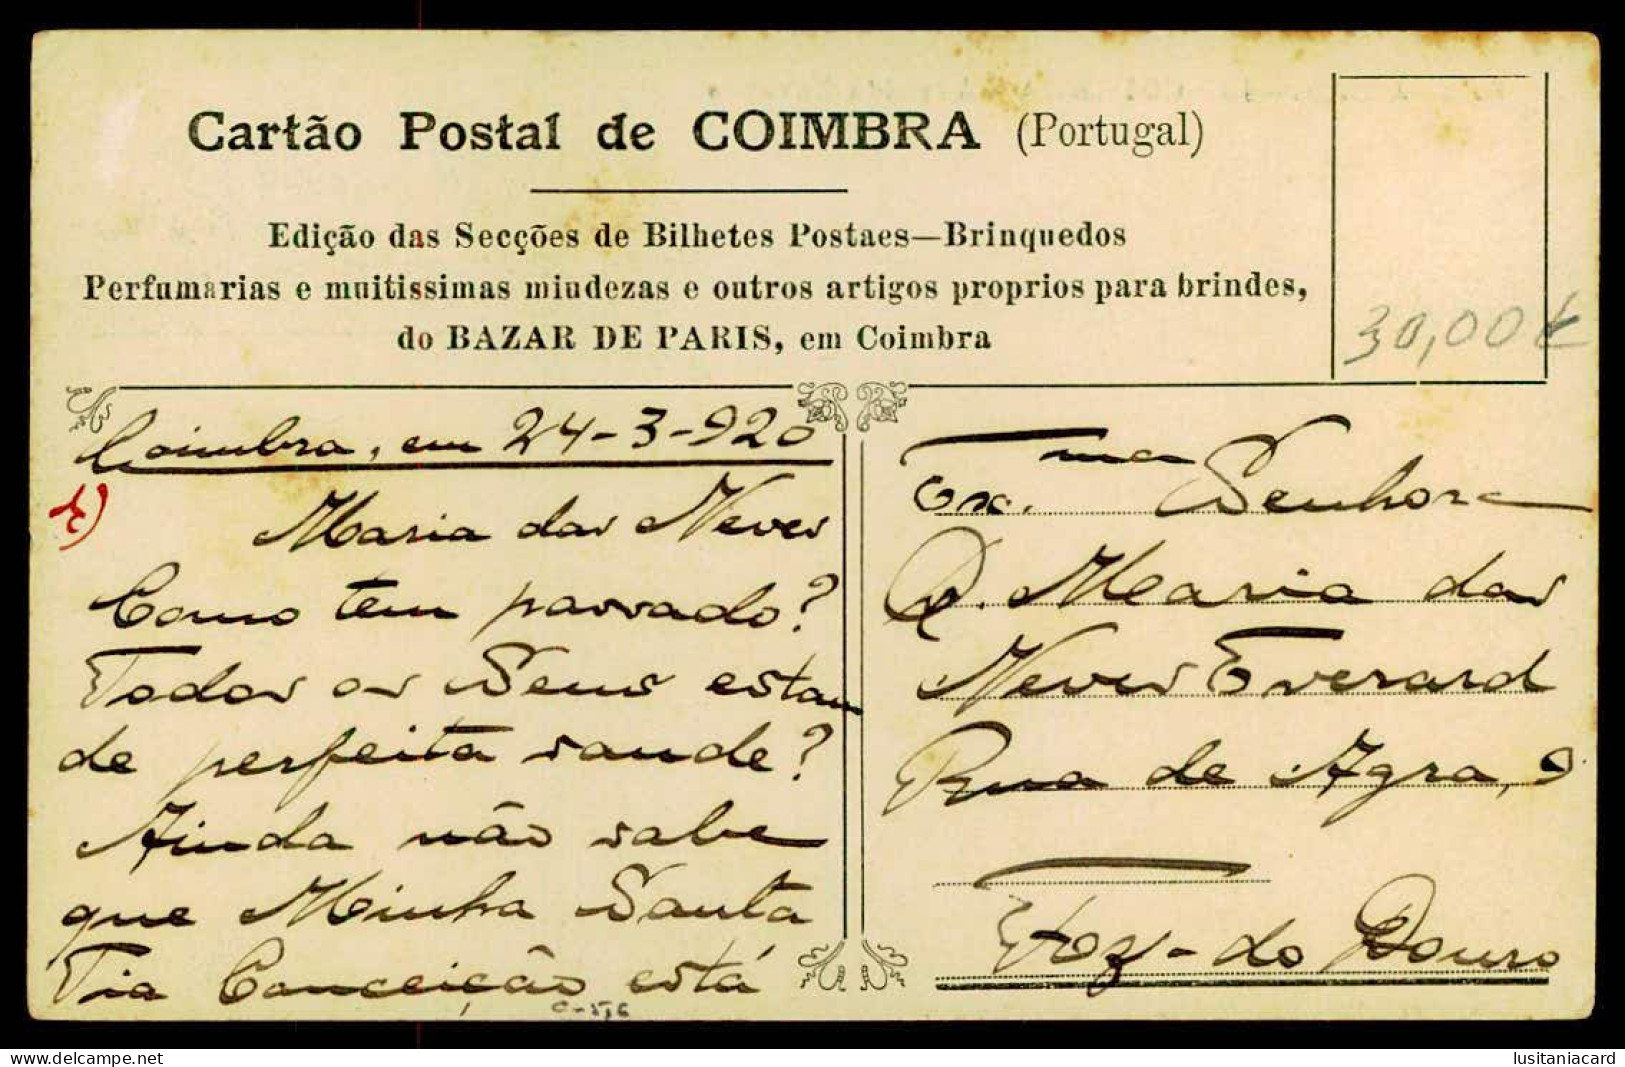 COIMBRA - Avenida Navarro. ( Ed. S.E. & C.S. Nº 13) Carte Postale - Coimbra